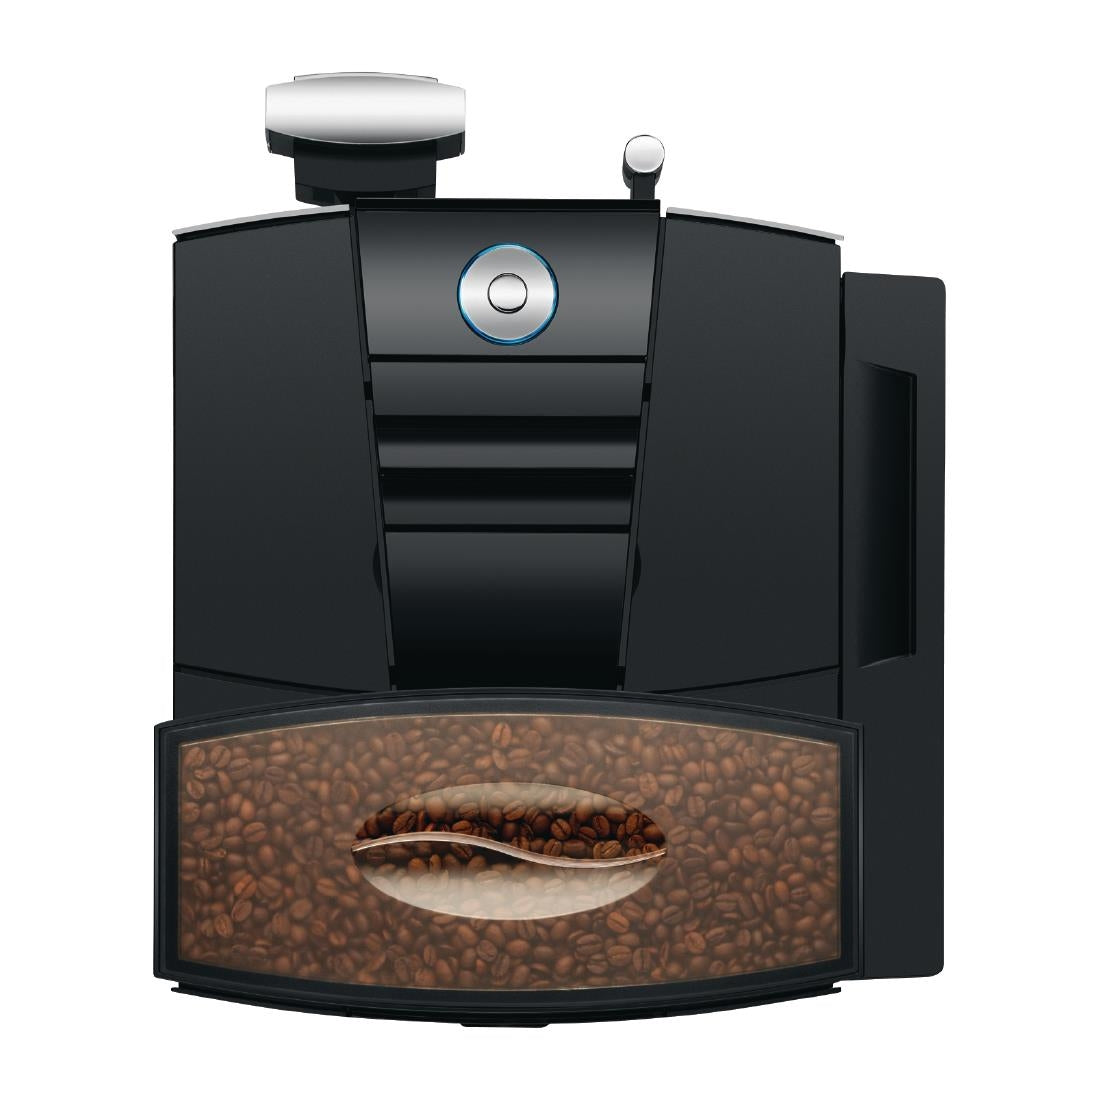 Jura Giga X3 2nd Gen Bean to Cup Coffee Machine 15229 JD Catering Equipment Solutions Ltd